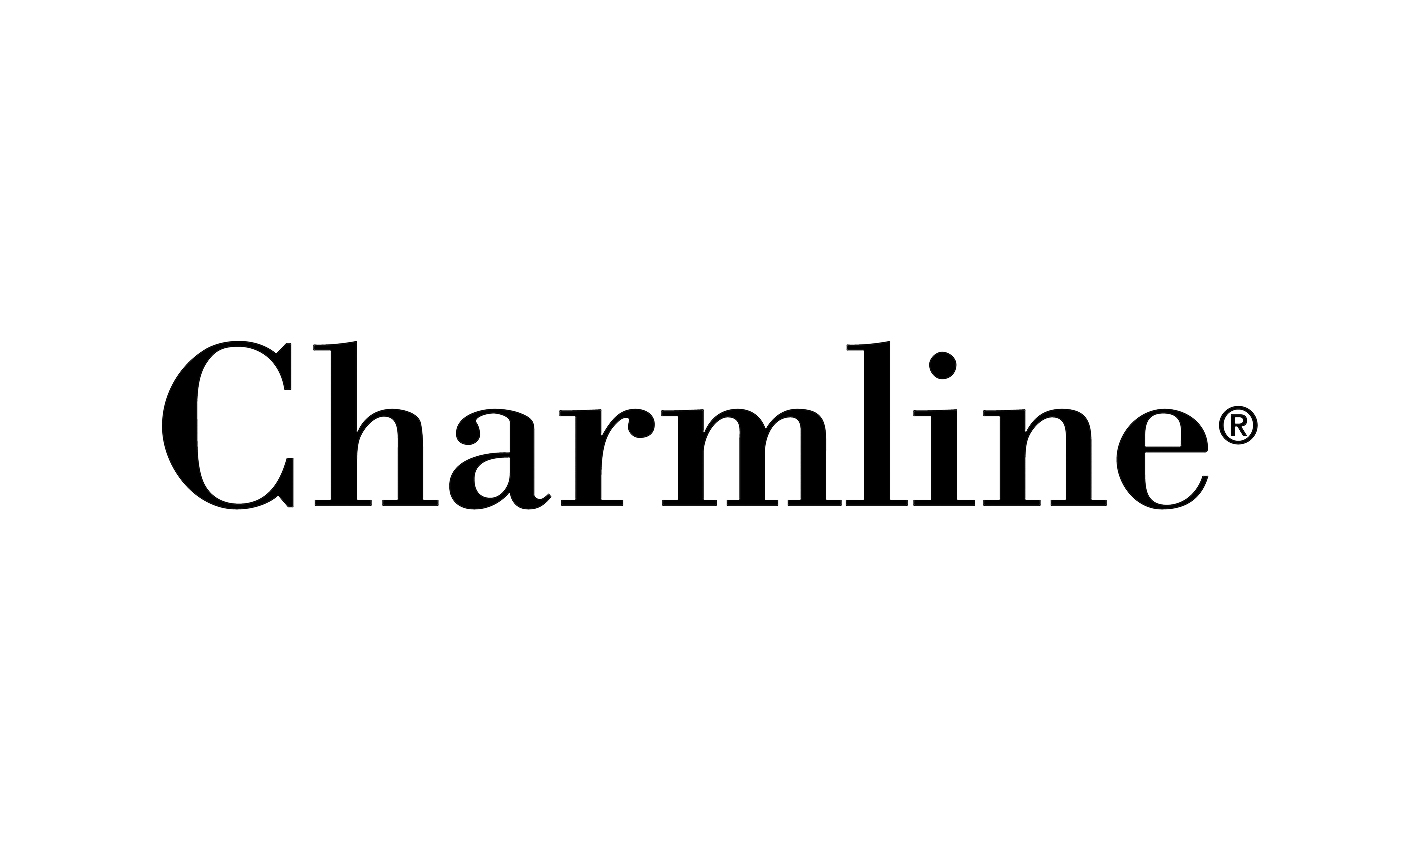 Charmline